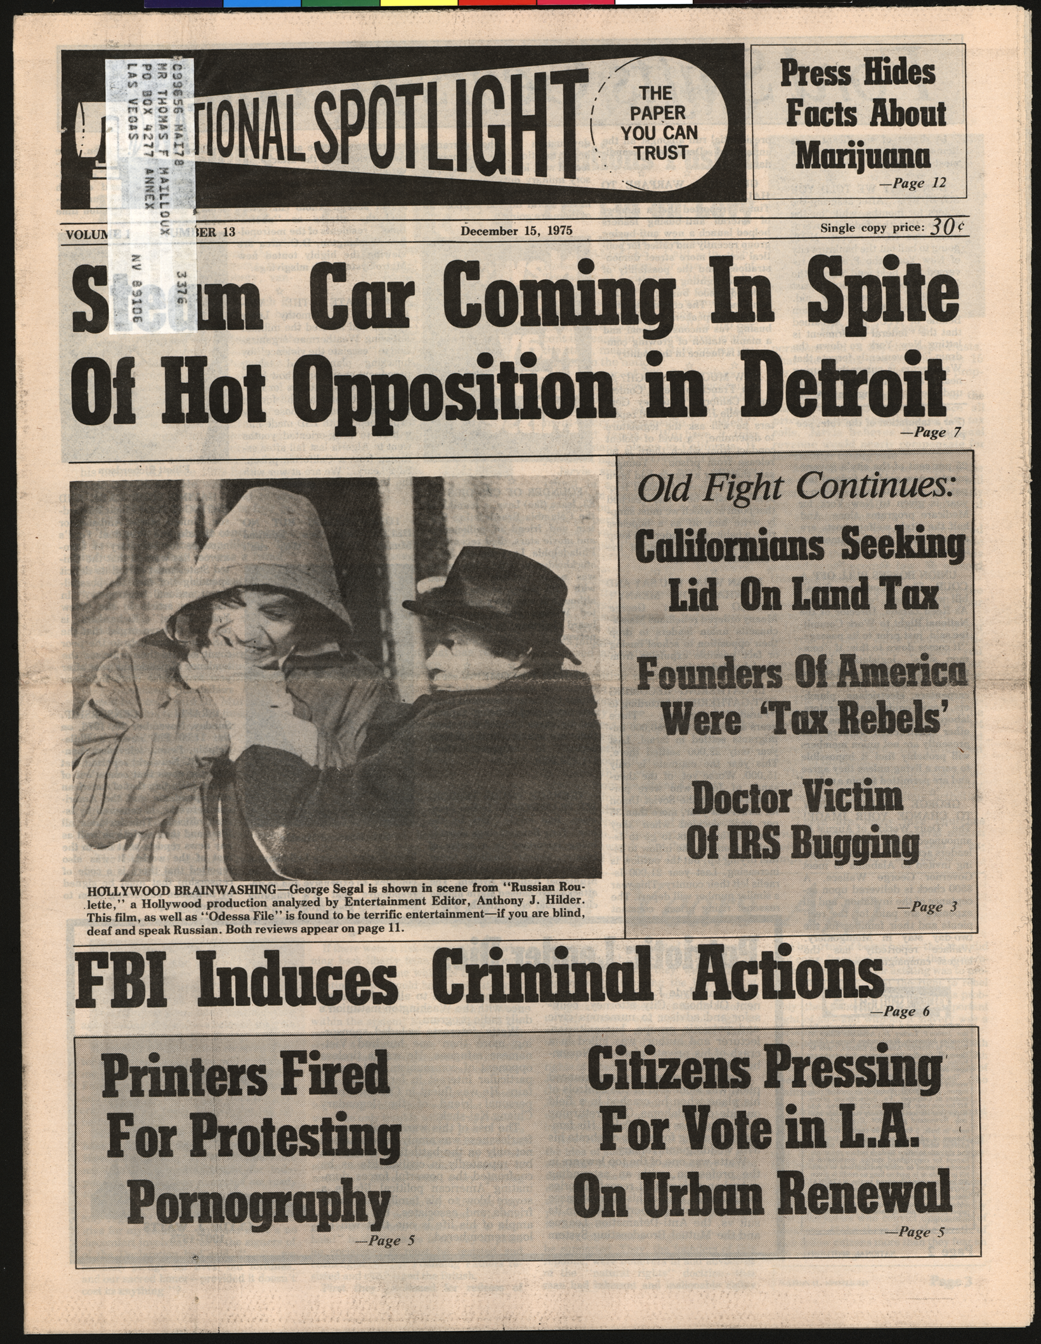 Richard Smith Newspaper Article, December 15, 1975